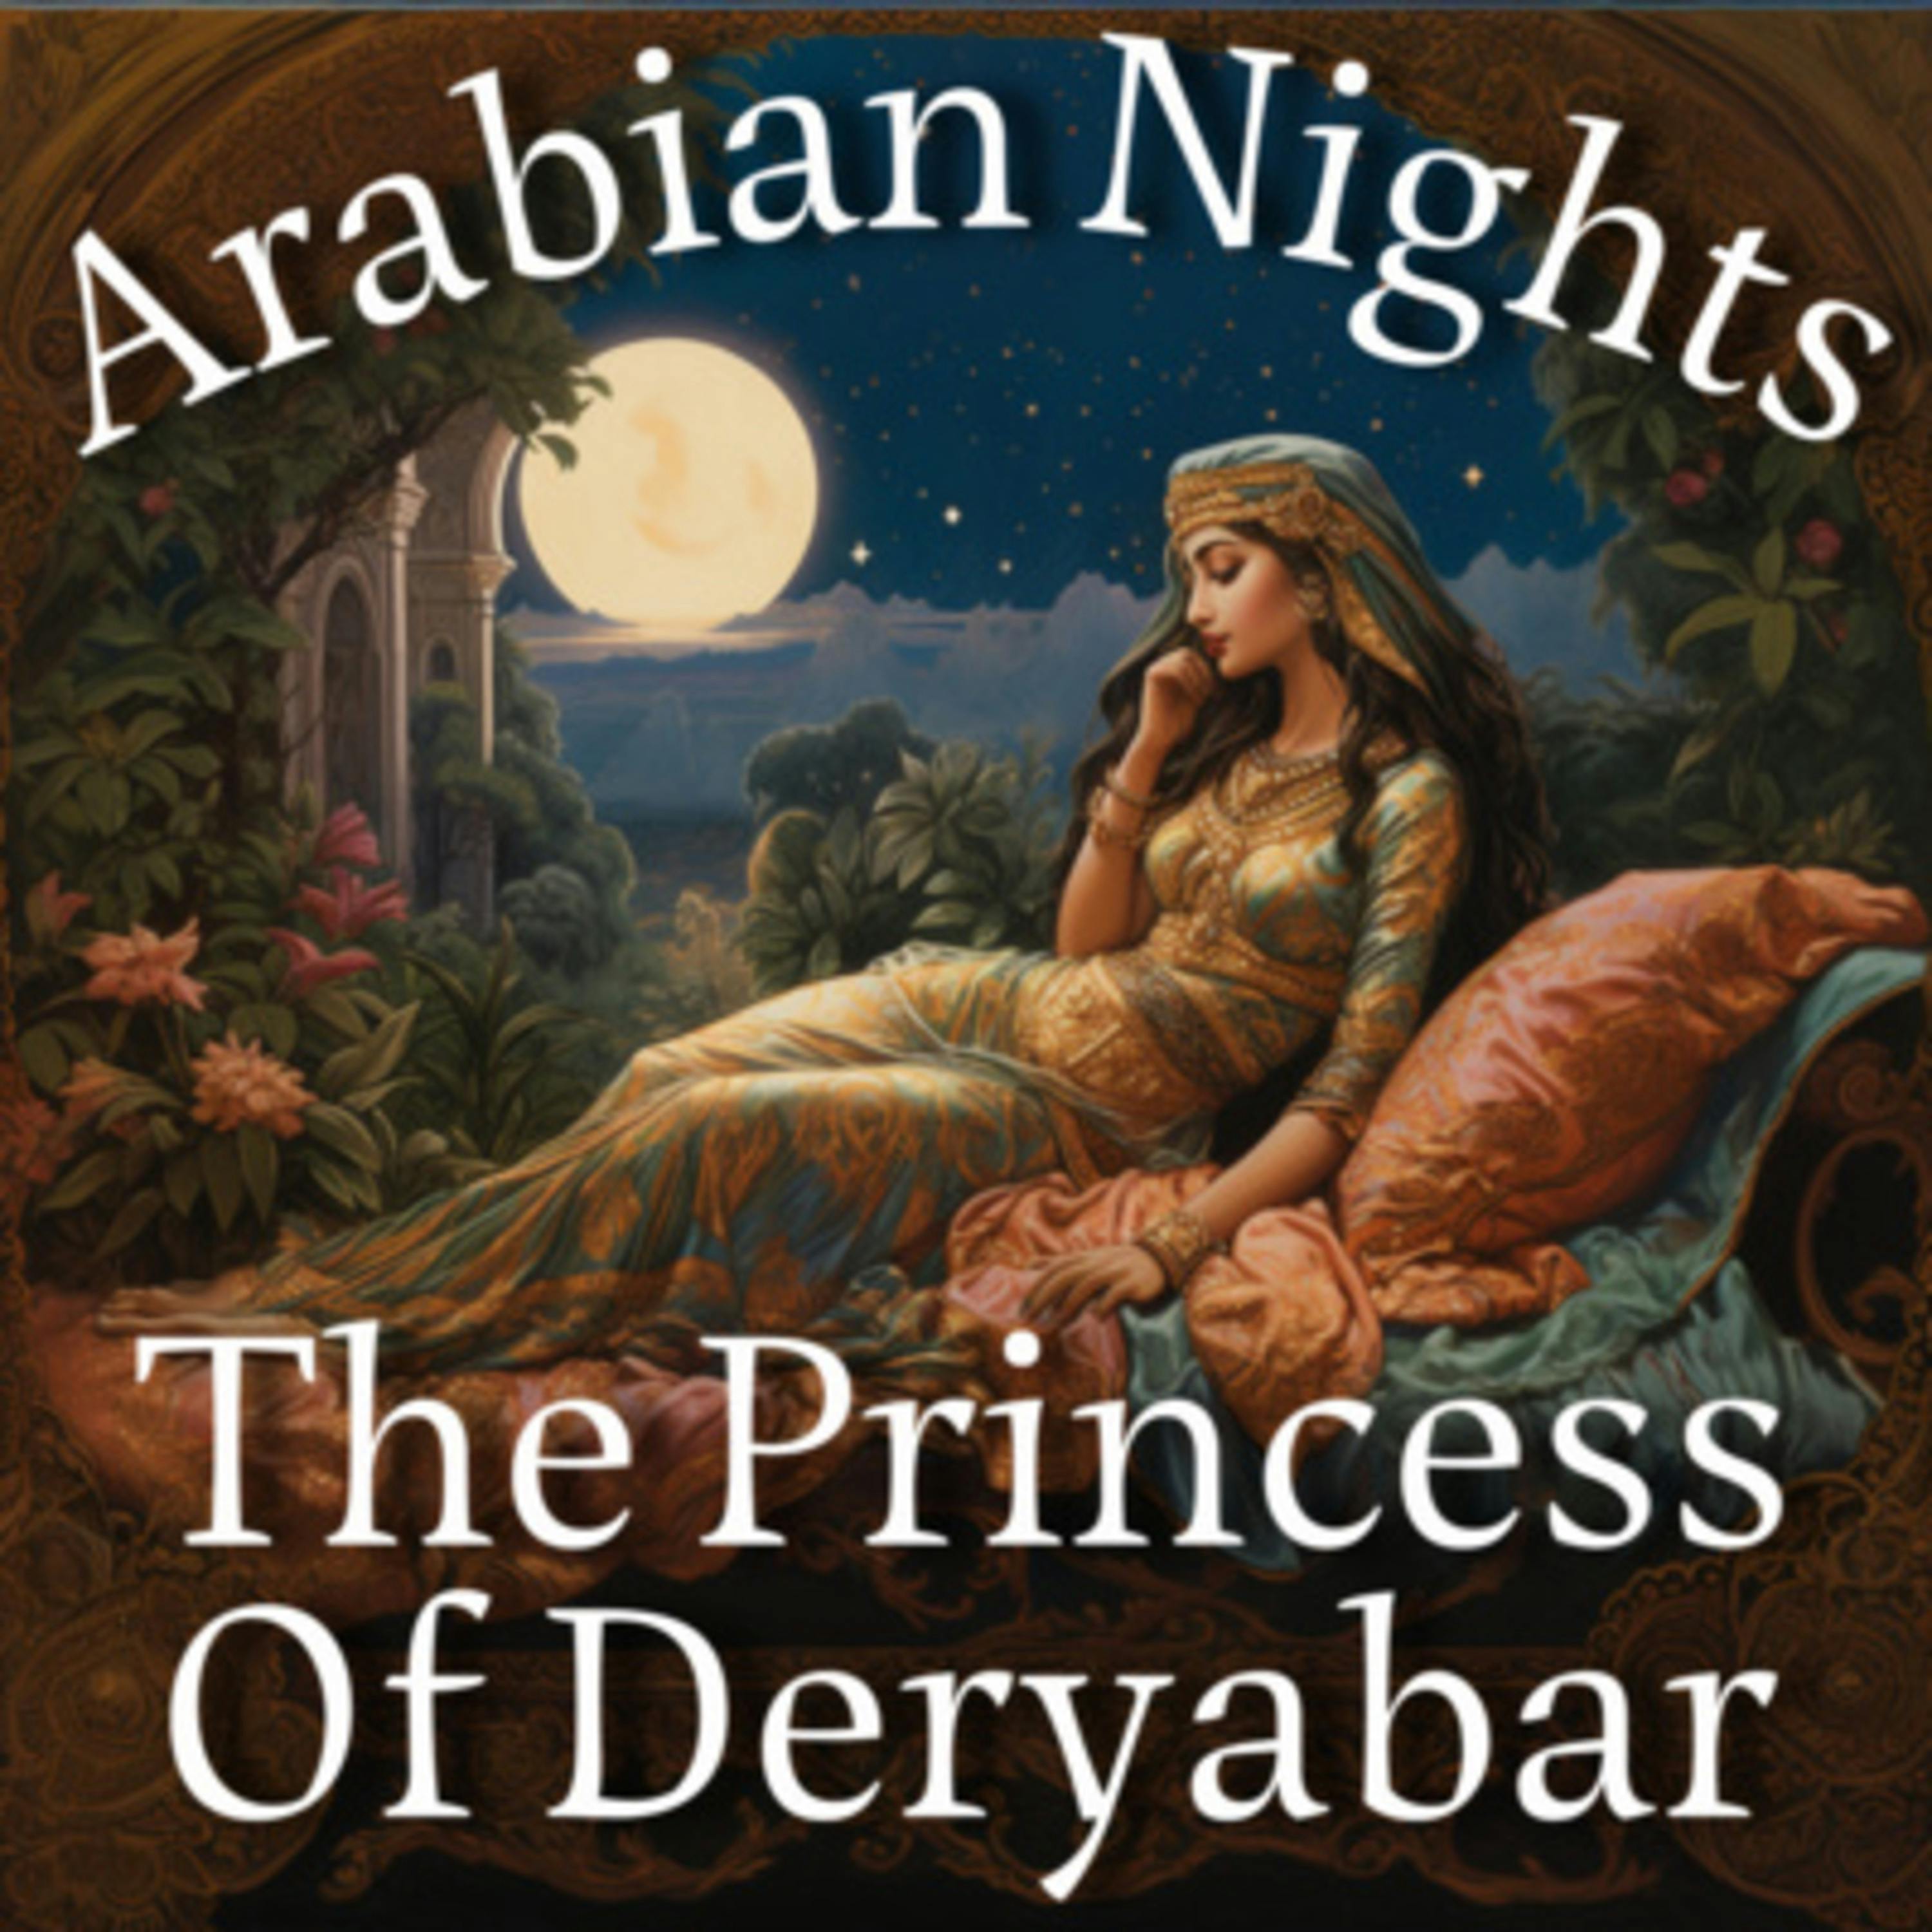 The Princess of Deryabar - An Arabian Night's Tale.